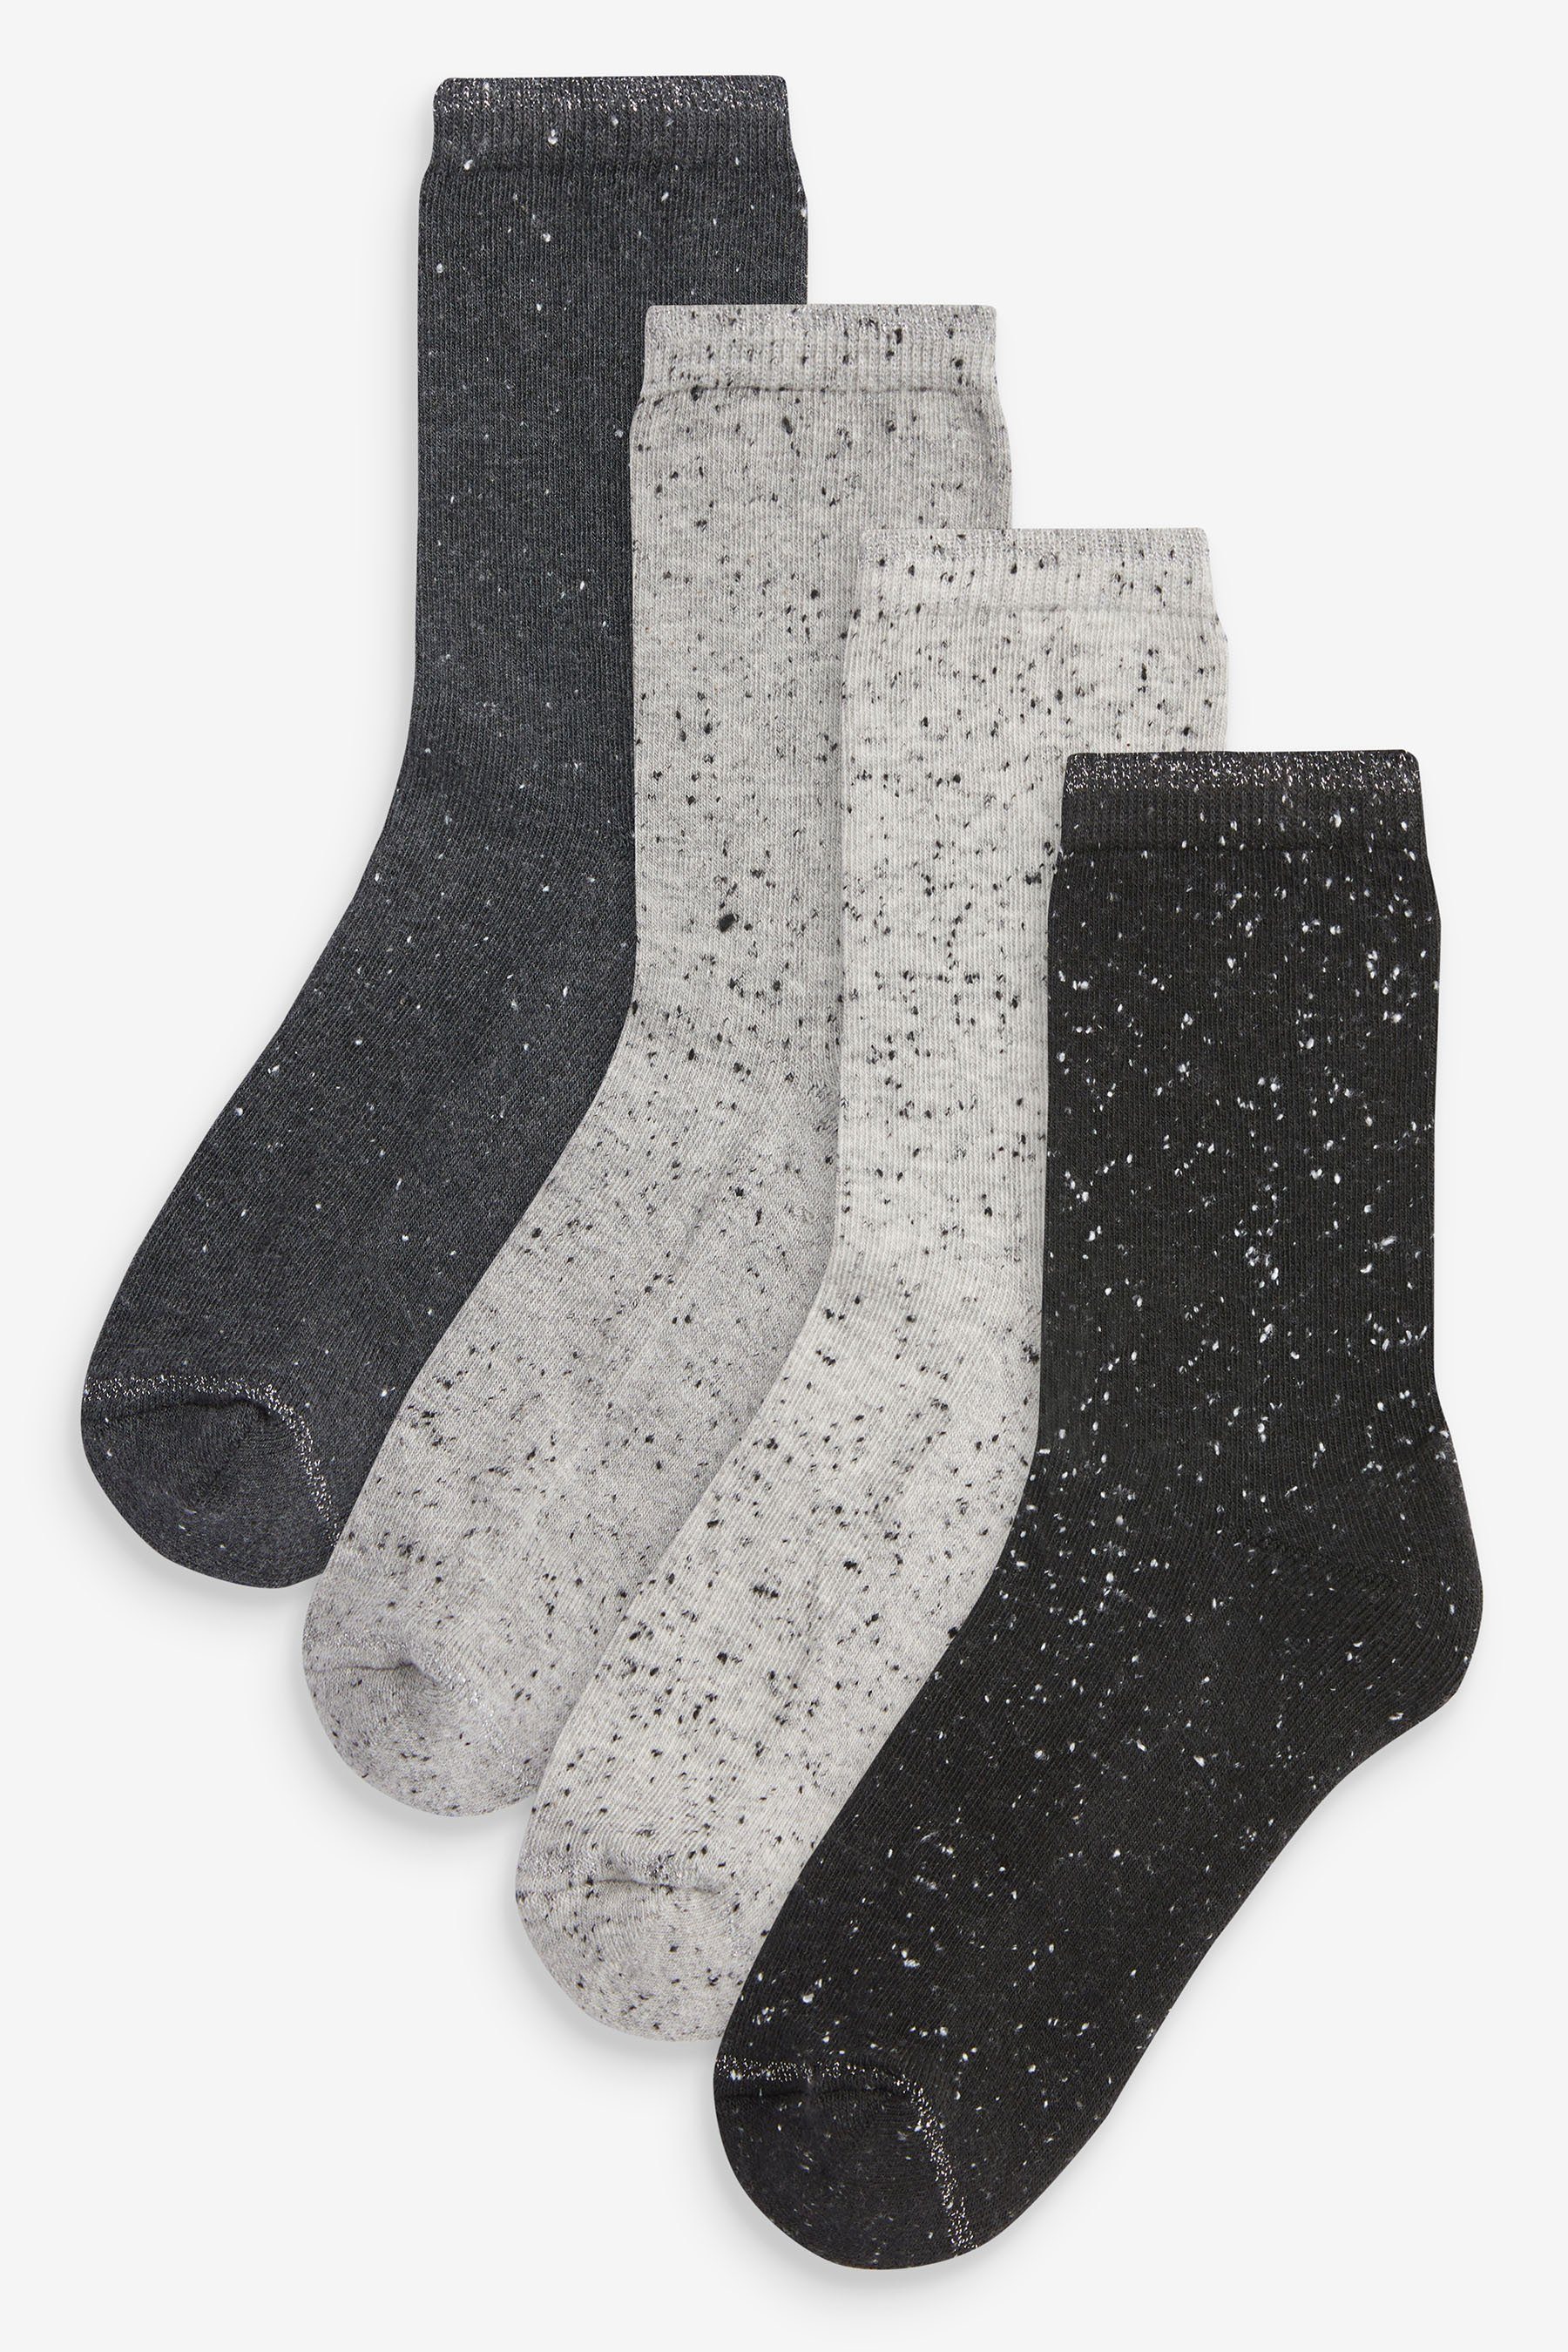 Next Kurzsocken Genoppte Socken mit gepolsterter Sohle, 4er-Pack (4-Paar) Monochrome